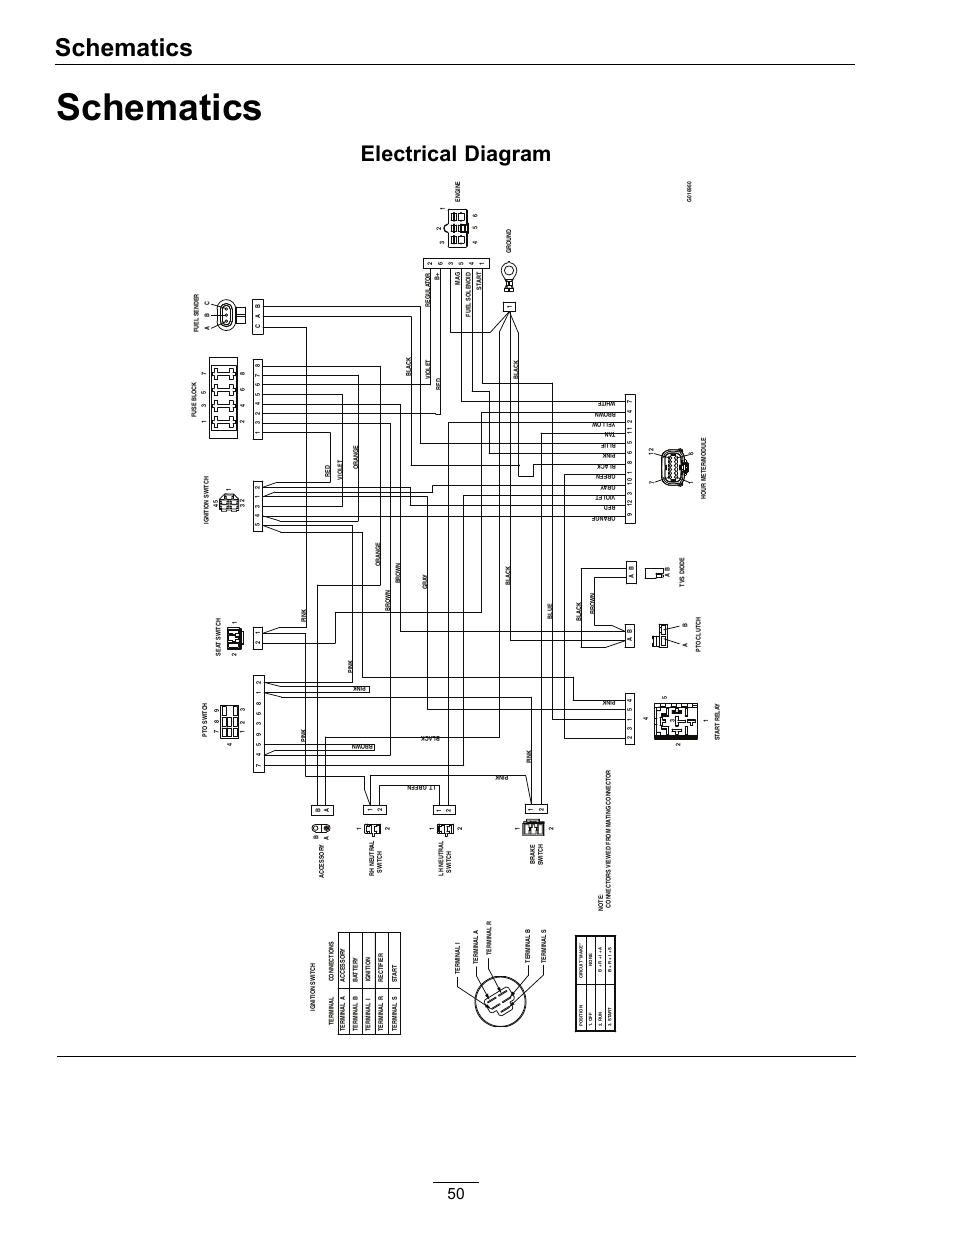 96-00 rm250 wiring diagram